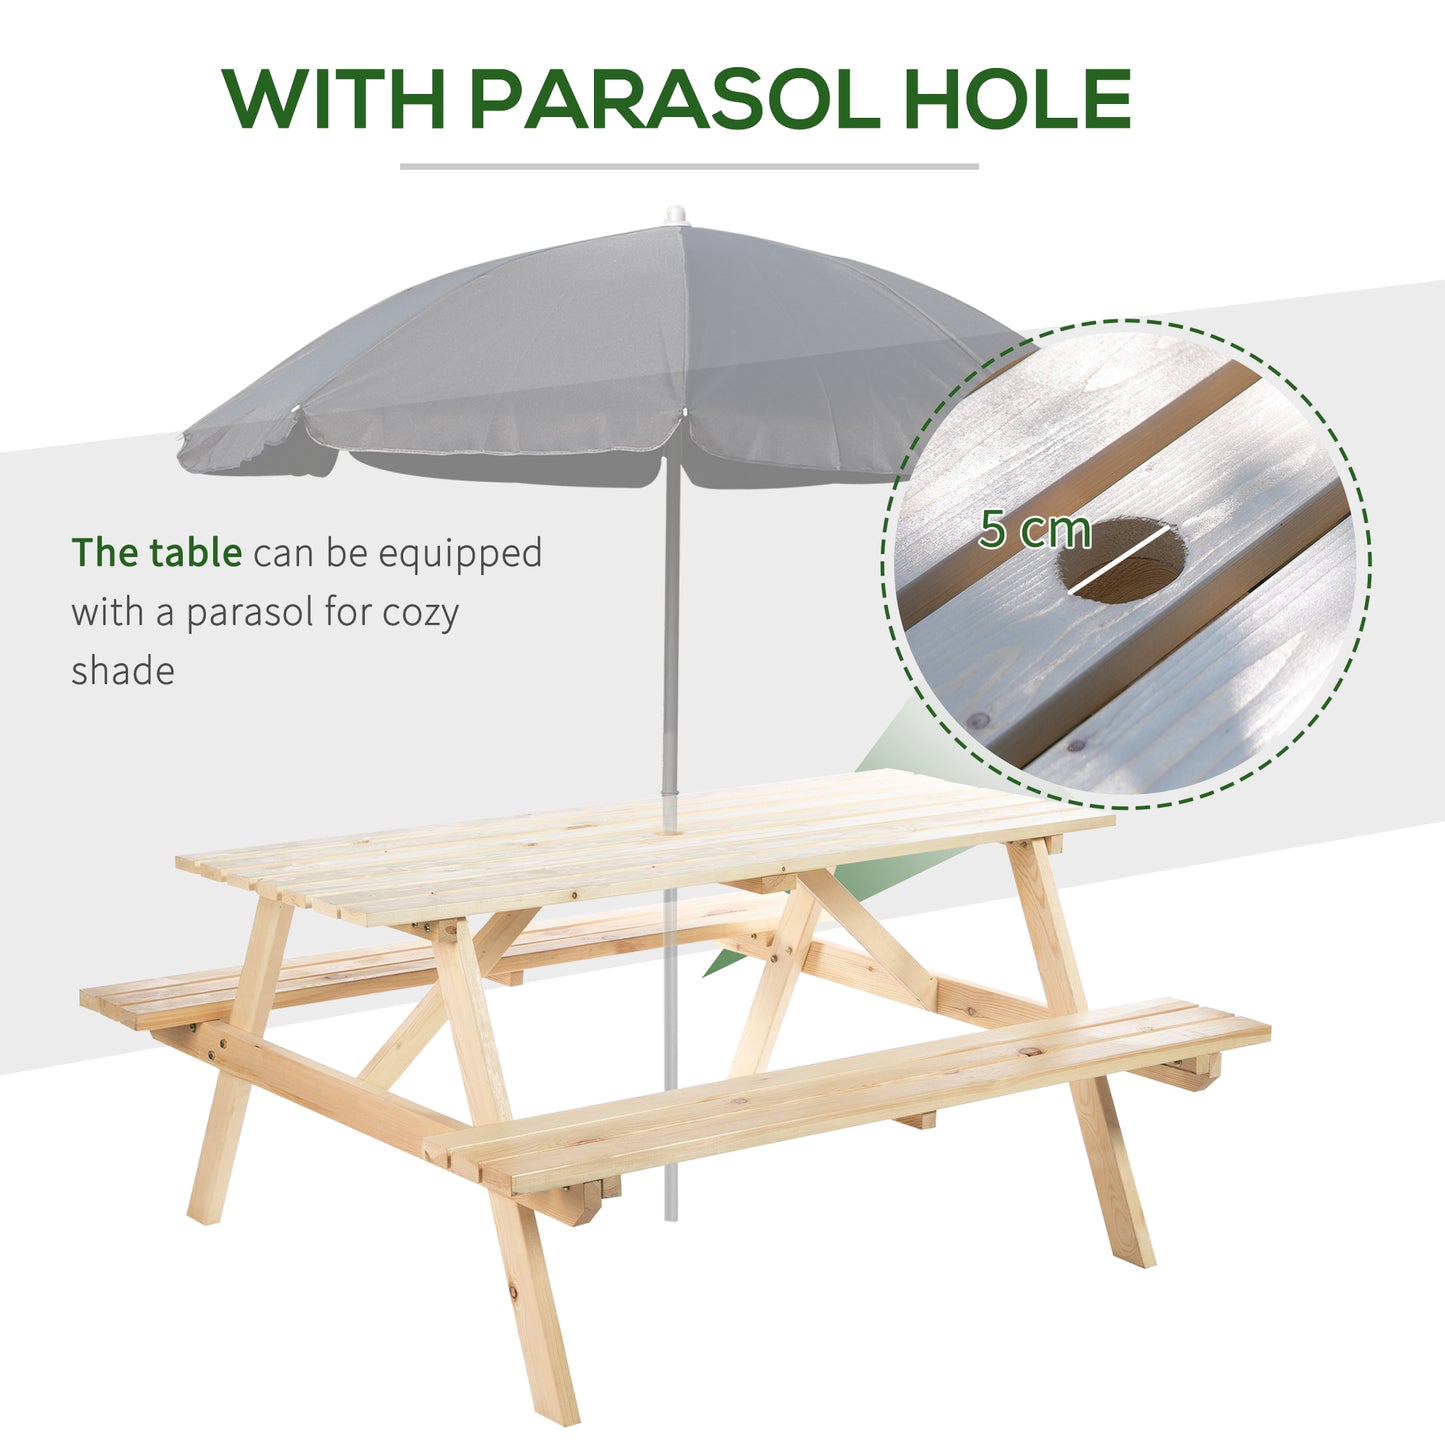 Outsunny 4-Seater Wooden Picnic Table, Outdoor Garden Bench with Parasol Cutout, 150cm, Durable